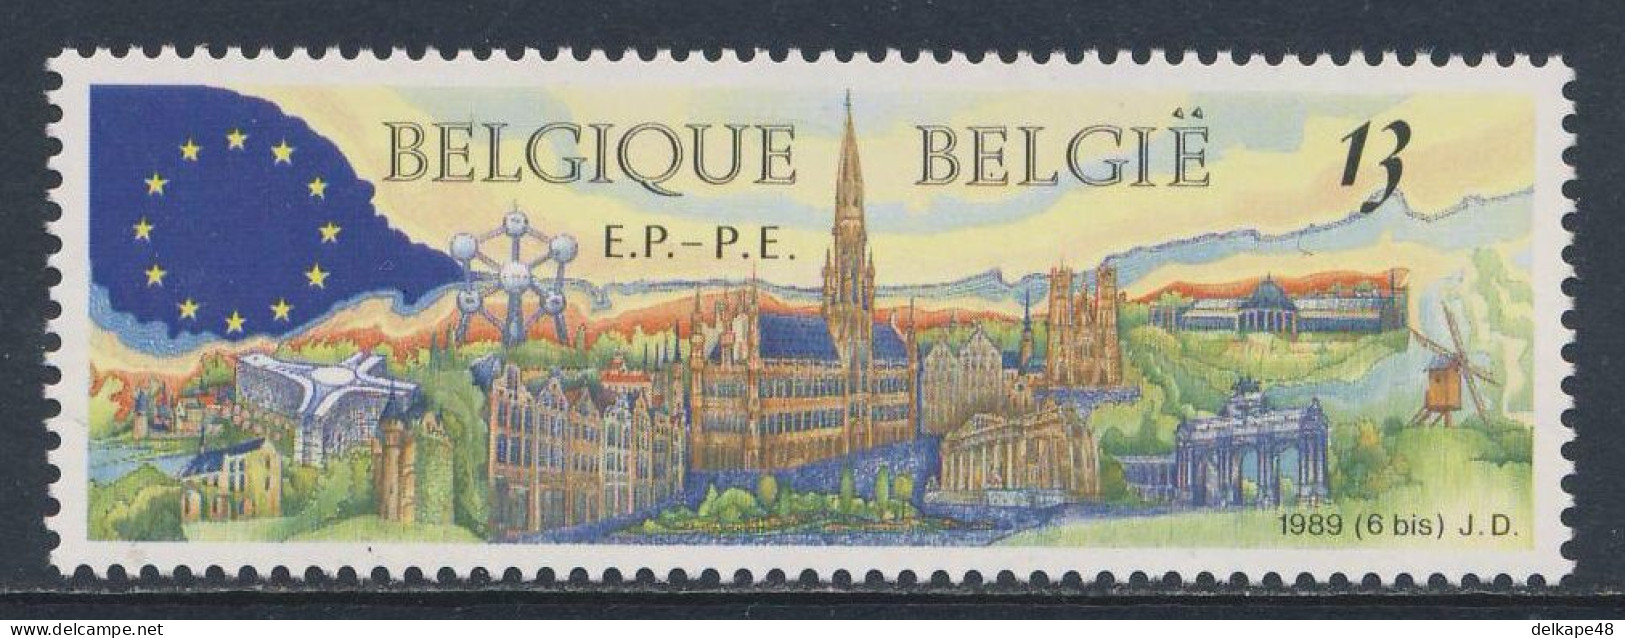 Belgie Belgique Belgium 1989 Mi 2378 YT 2326 SG 2986 ** Brussels / Stadtansicht Brüssel, Europafahne - - EU-Organe